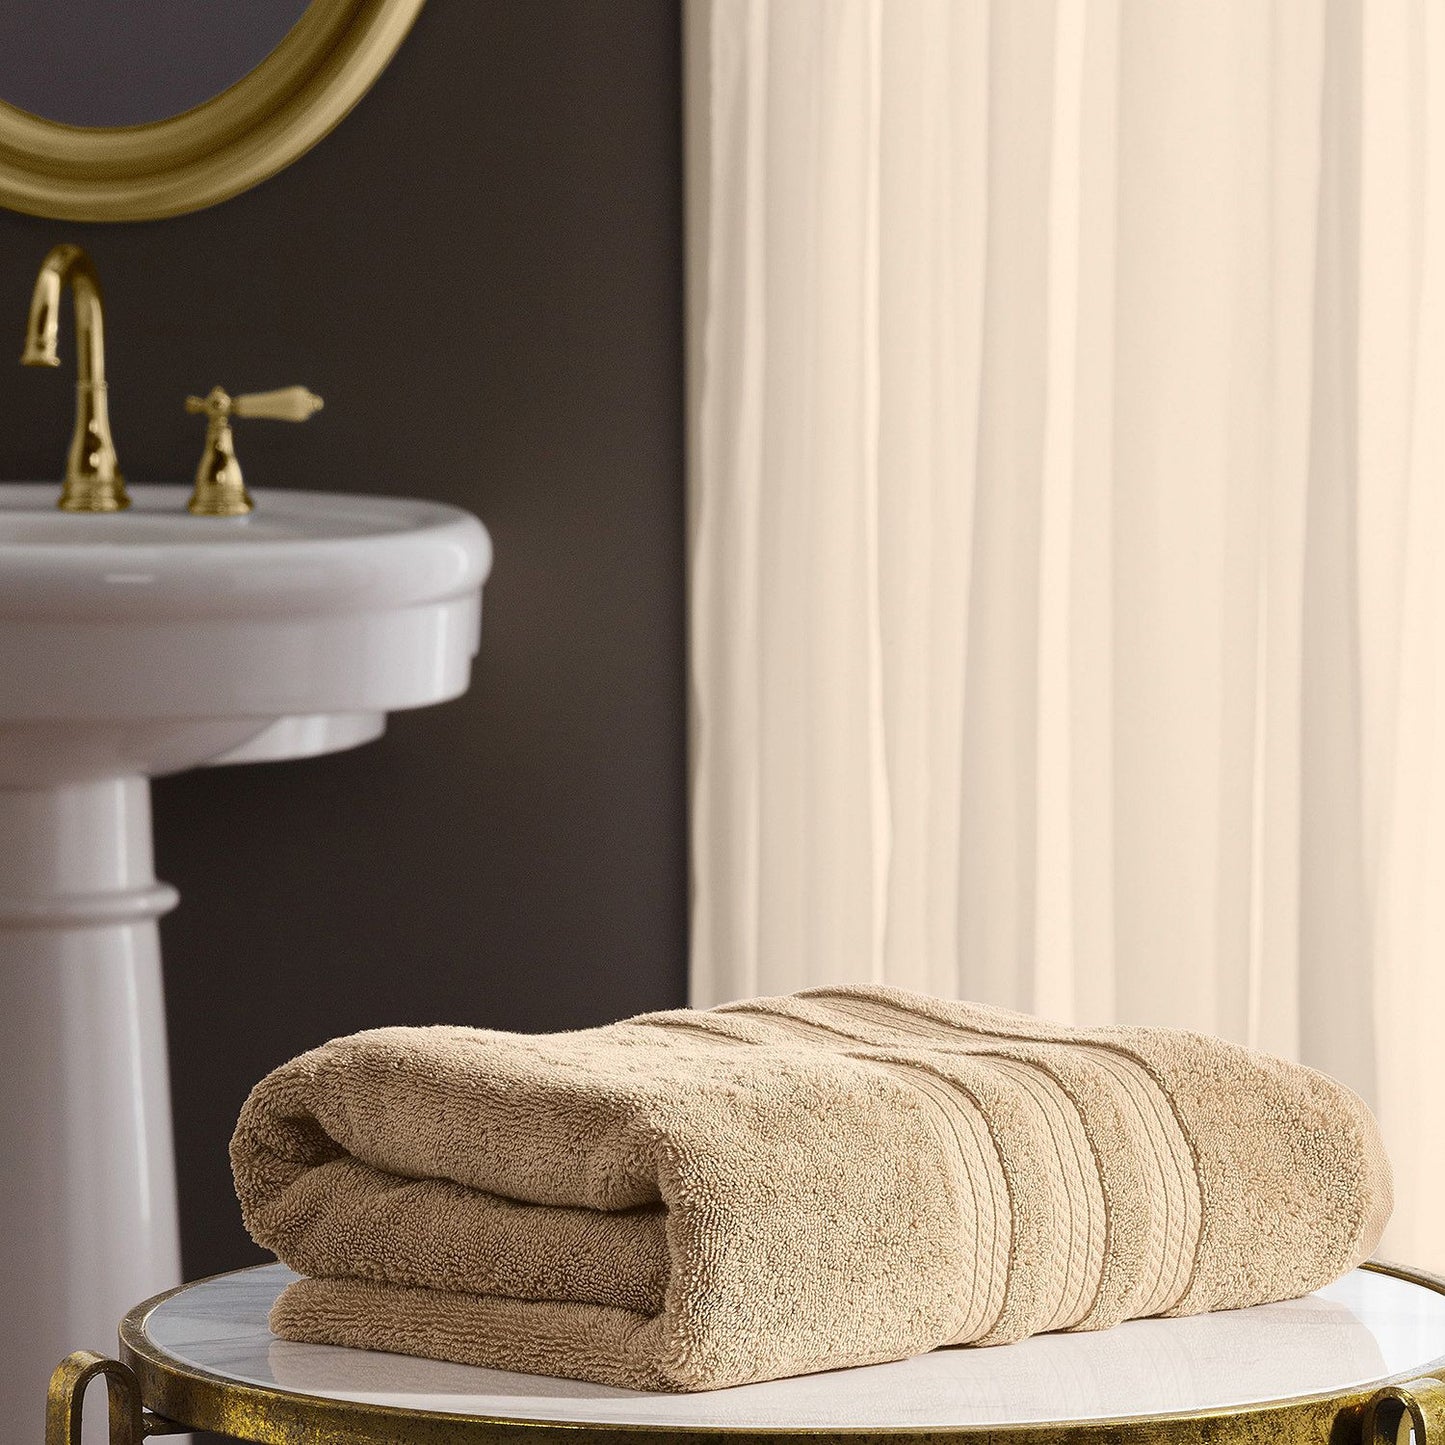 Omni Linens Grandeur Hospitality Bath Towel 6 Pack 34 x 54 100% Cotton 6 Pack